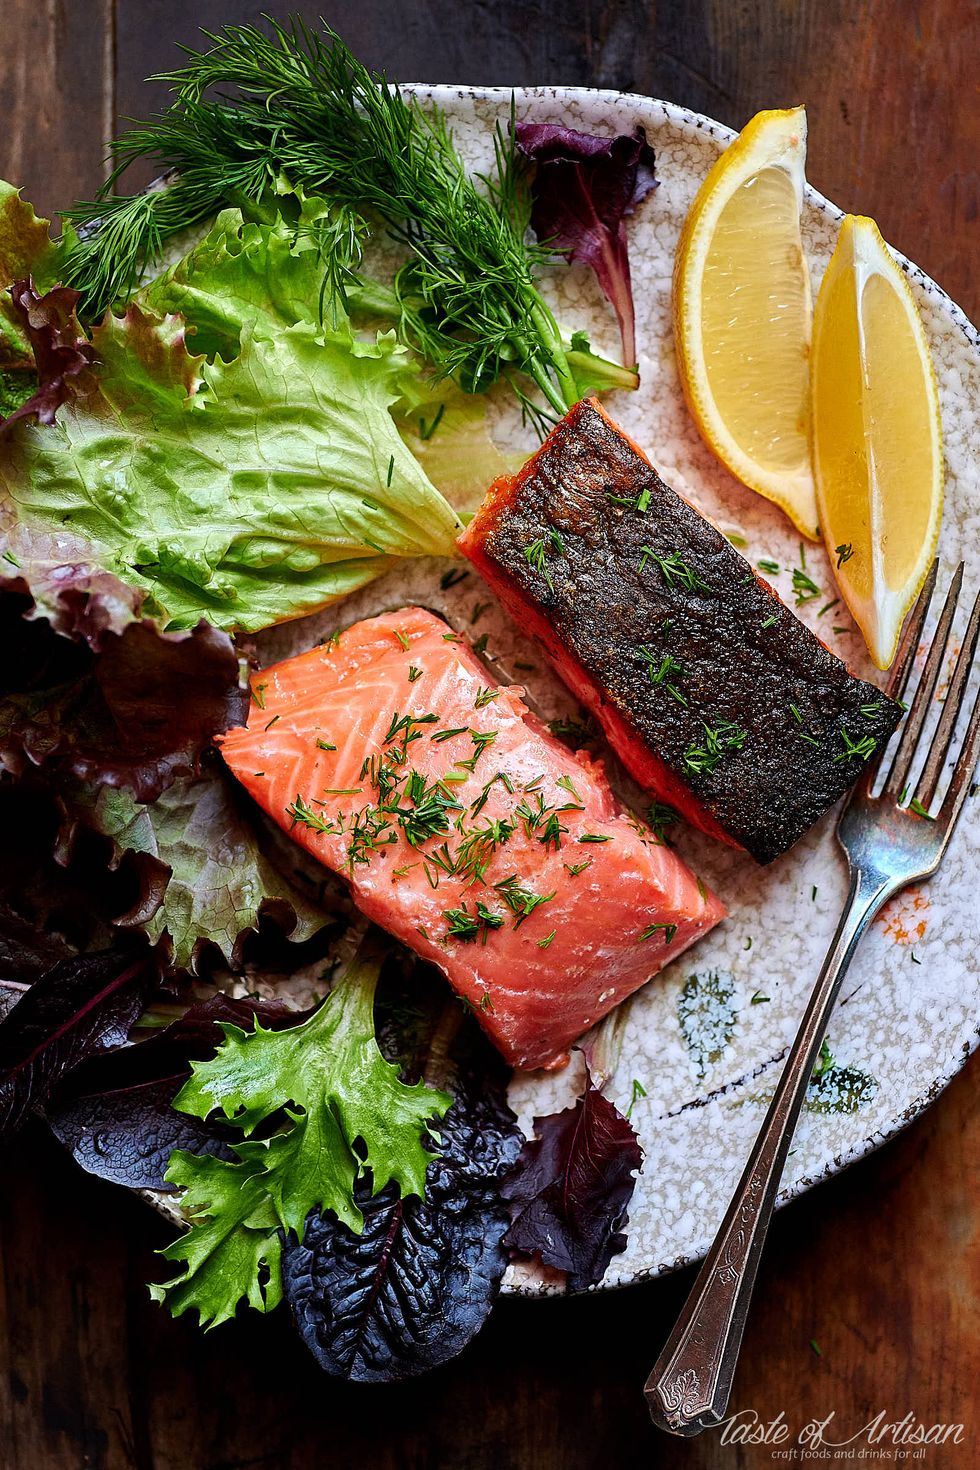 https://hips.hearstapps.com/hmg-prod/images/best-sous-vide-recipes-salmon-1558404847.jpg?crop=1xw:1xh;center,top&resize=980:*